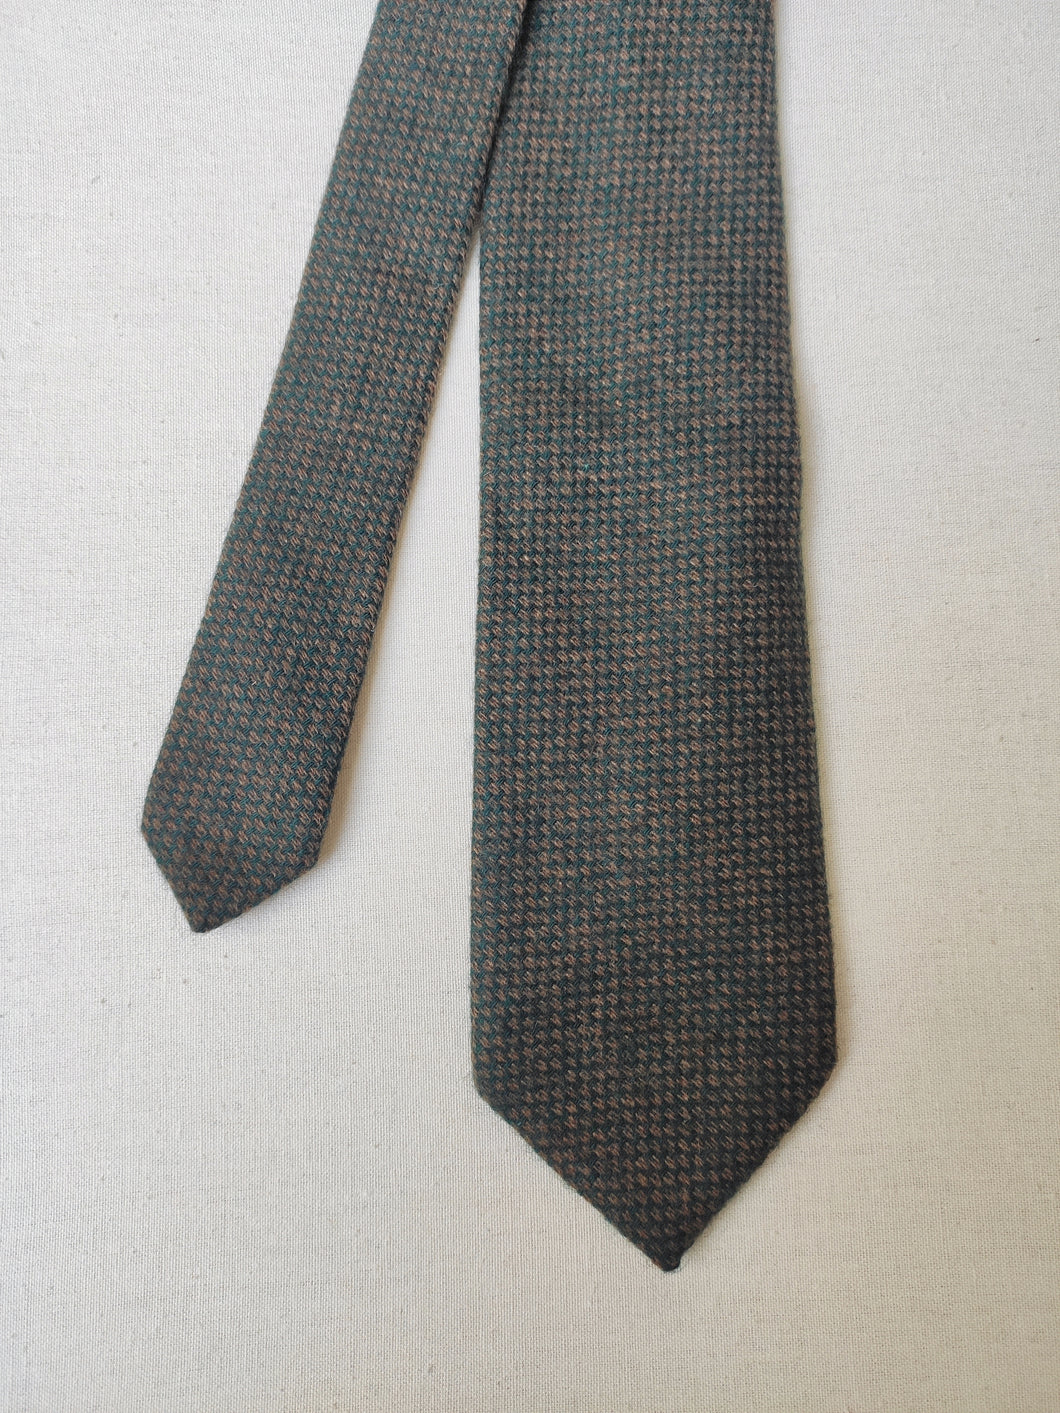 Nicky Milano cravate verte vintage en pur cachemire Made in Italy